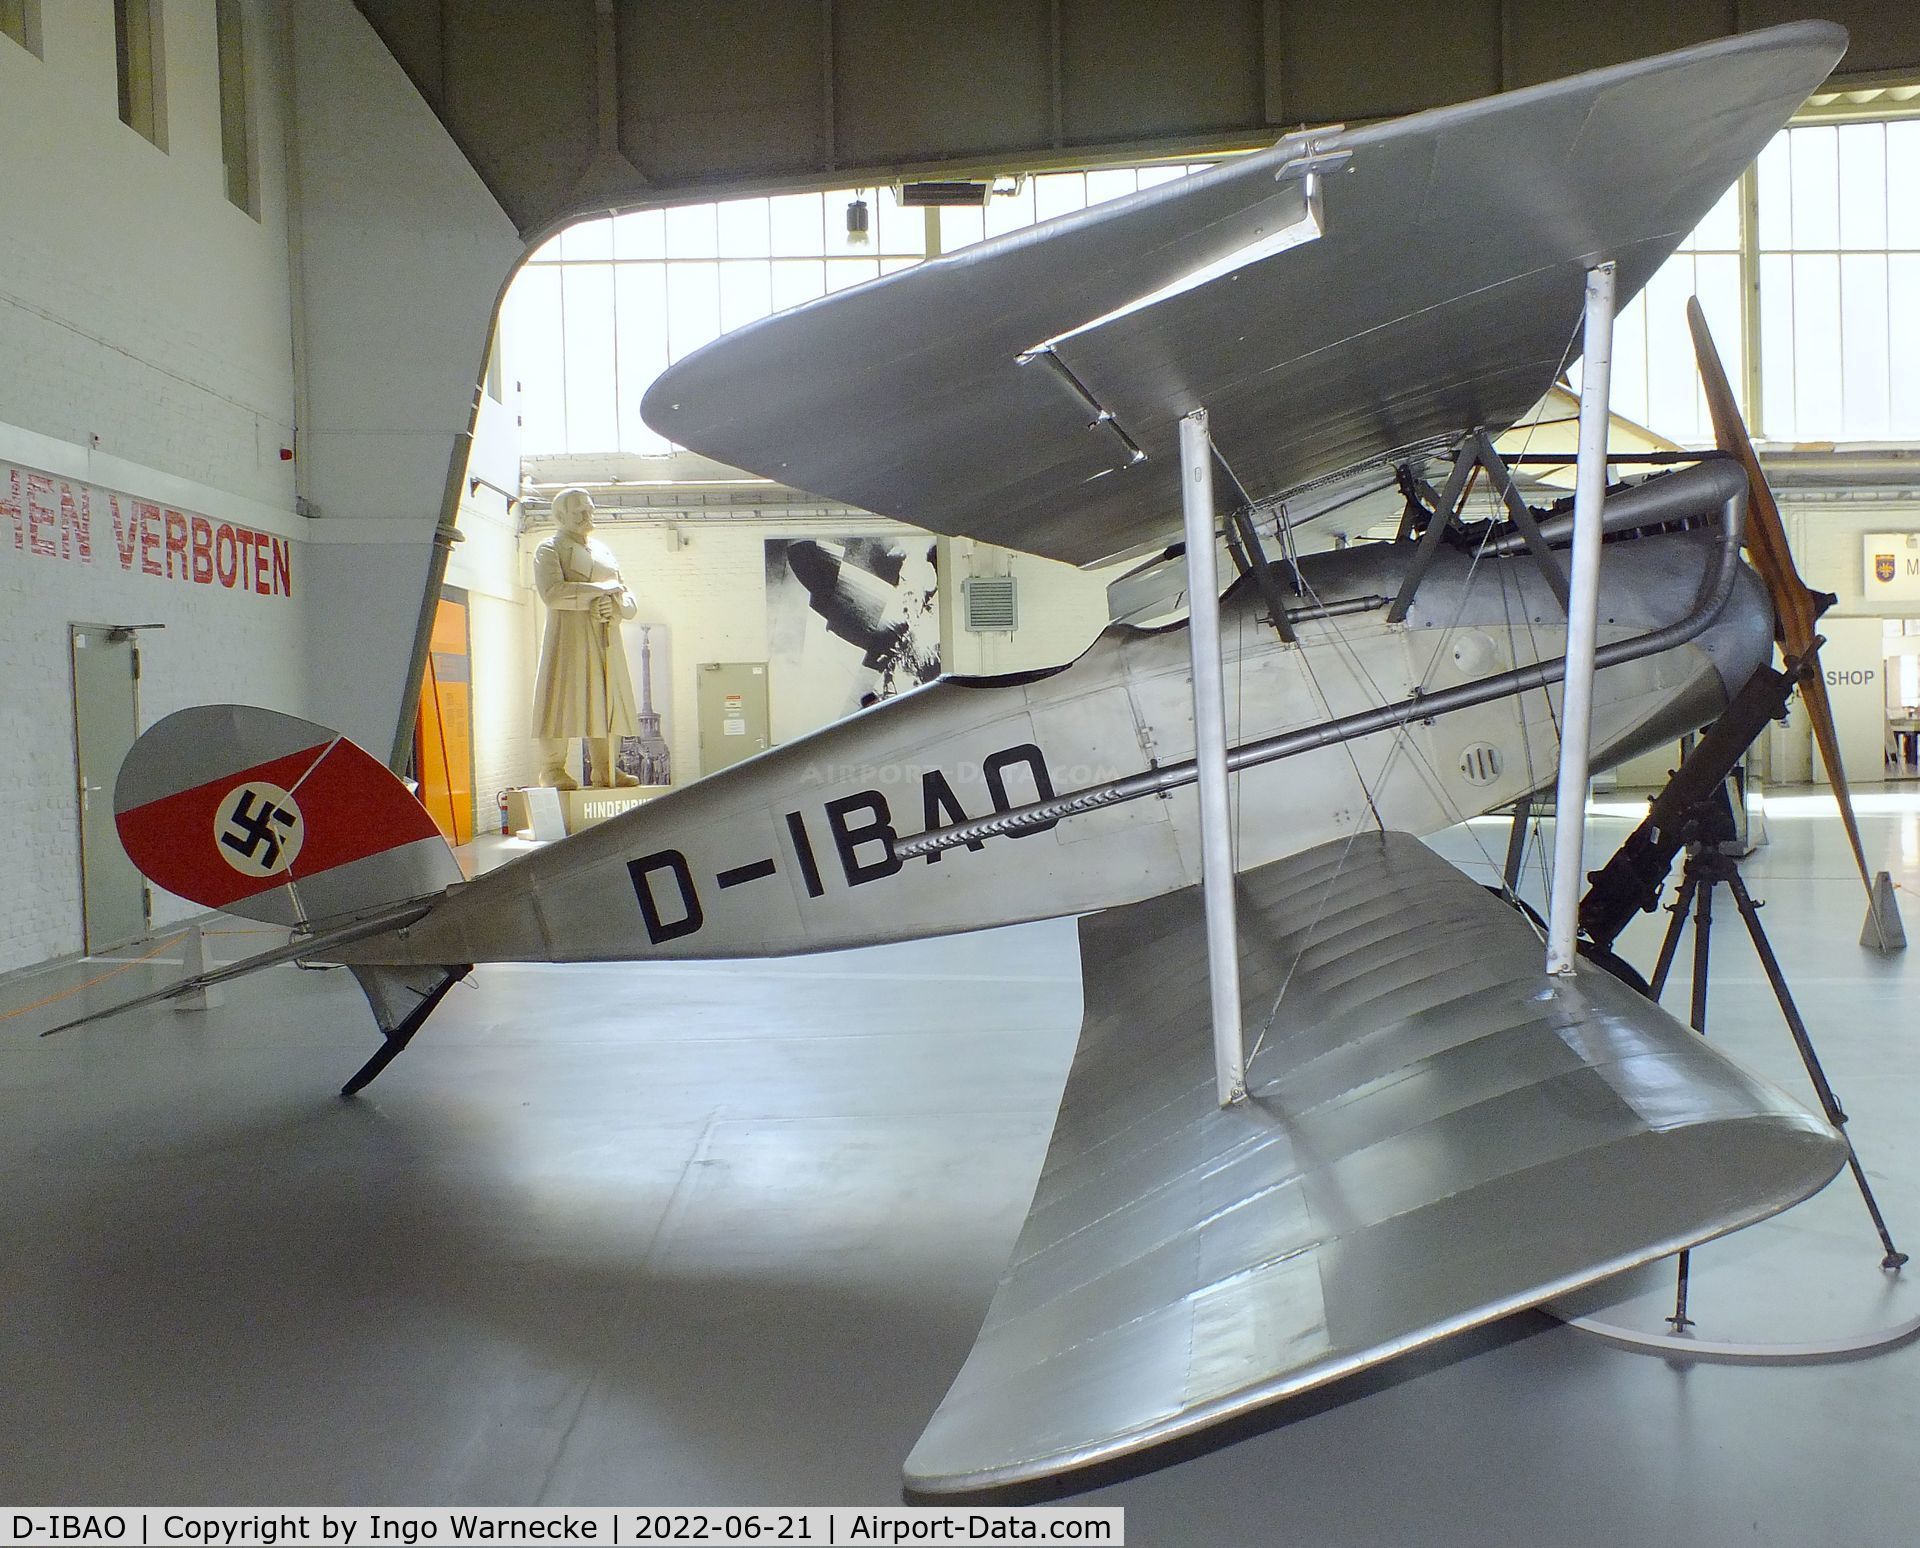 D-IBAO, Halberstadt CL.IV C/N 4205, Halberstadt CL IV civil conversion at the MHM Berlin-Gatow (aka Luftwaffenmuseum, German Air Force Museum)